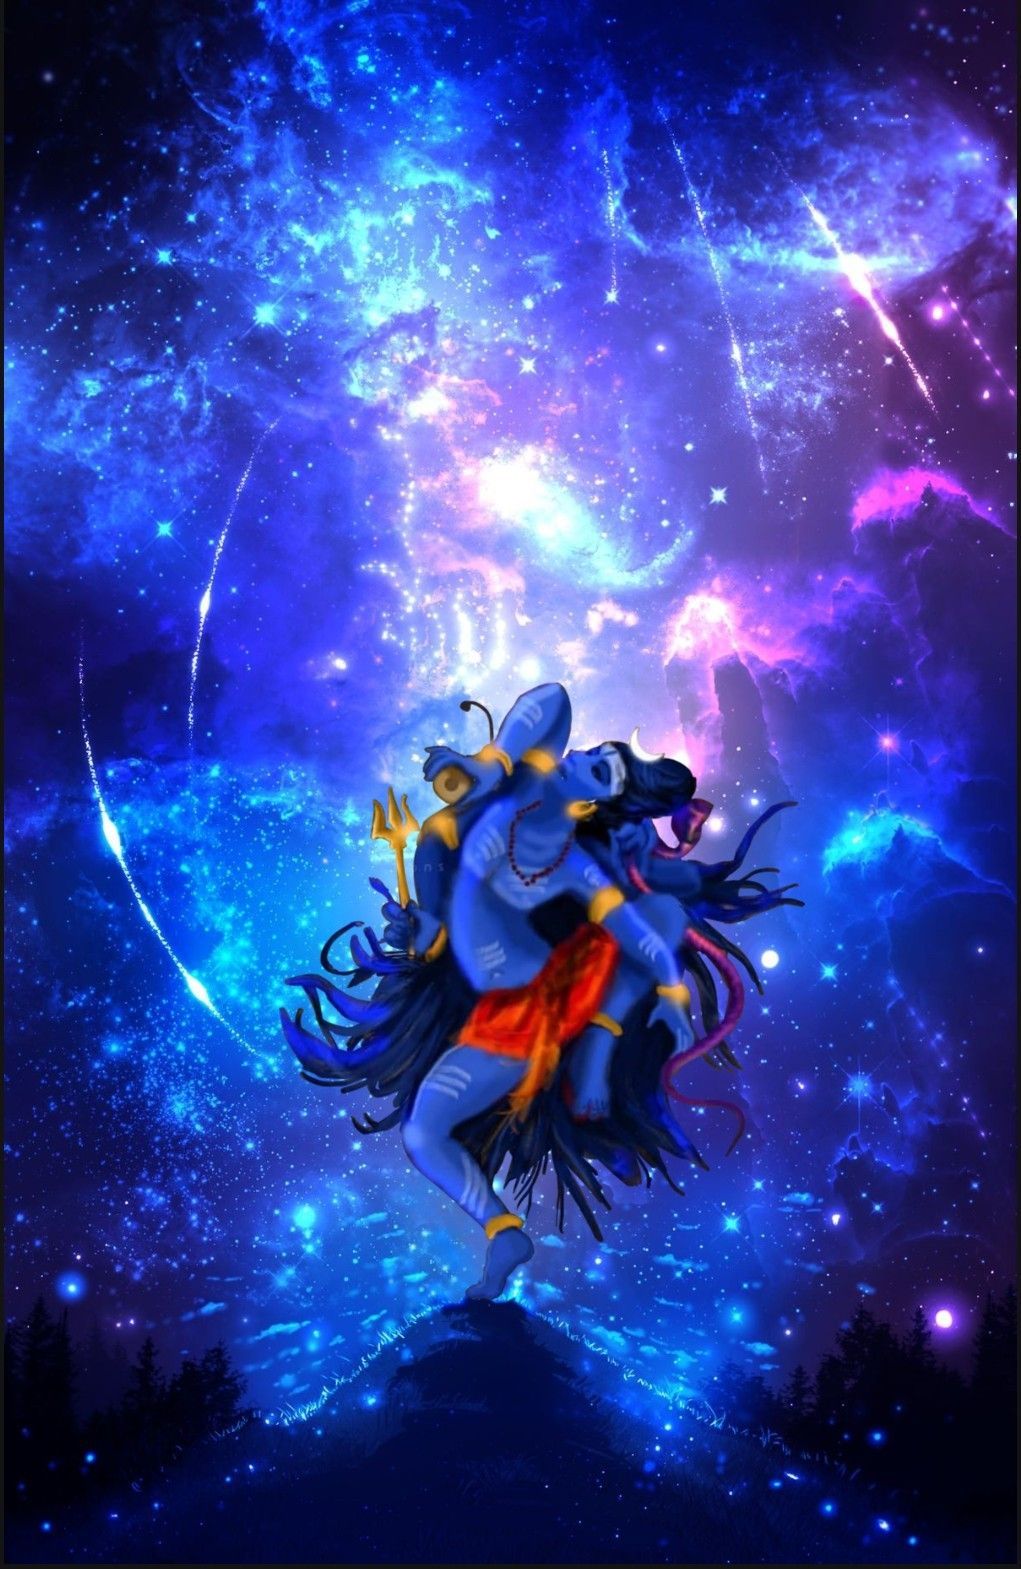 Lord Shiva as Nataraj in creative art painting. Lord shiva painting, Shiva lord wallpaper, Lord shiva family